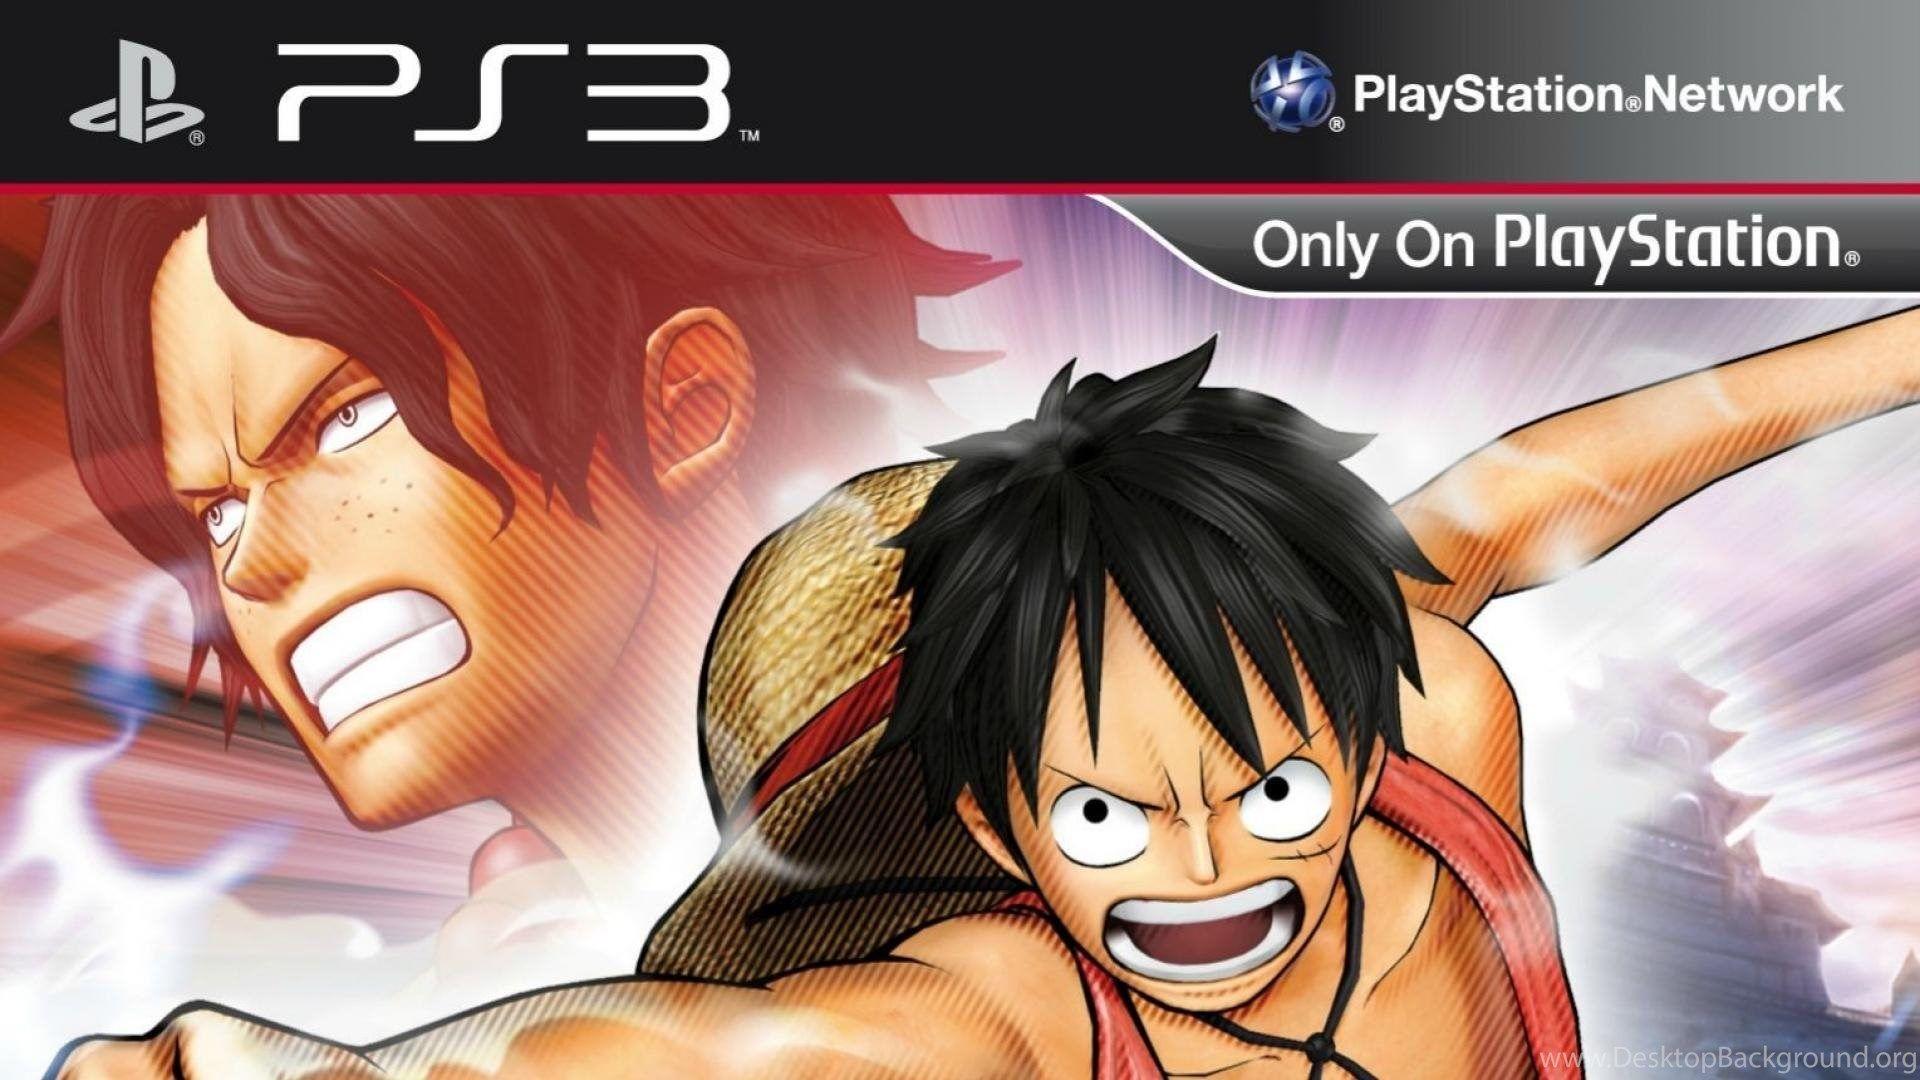 Video Games One Piece (anime) Ps3 Wallpaper Desktop Background